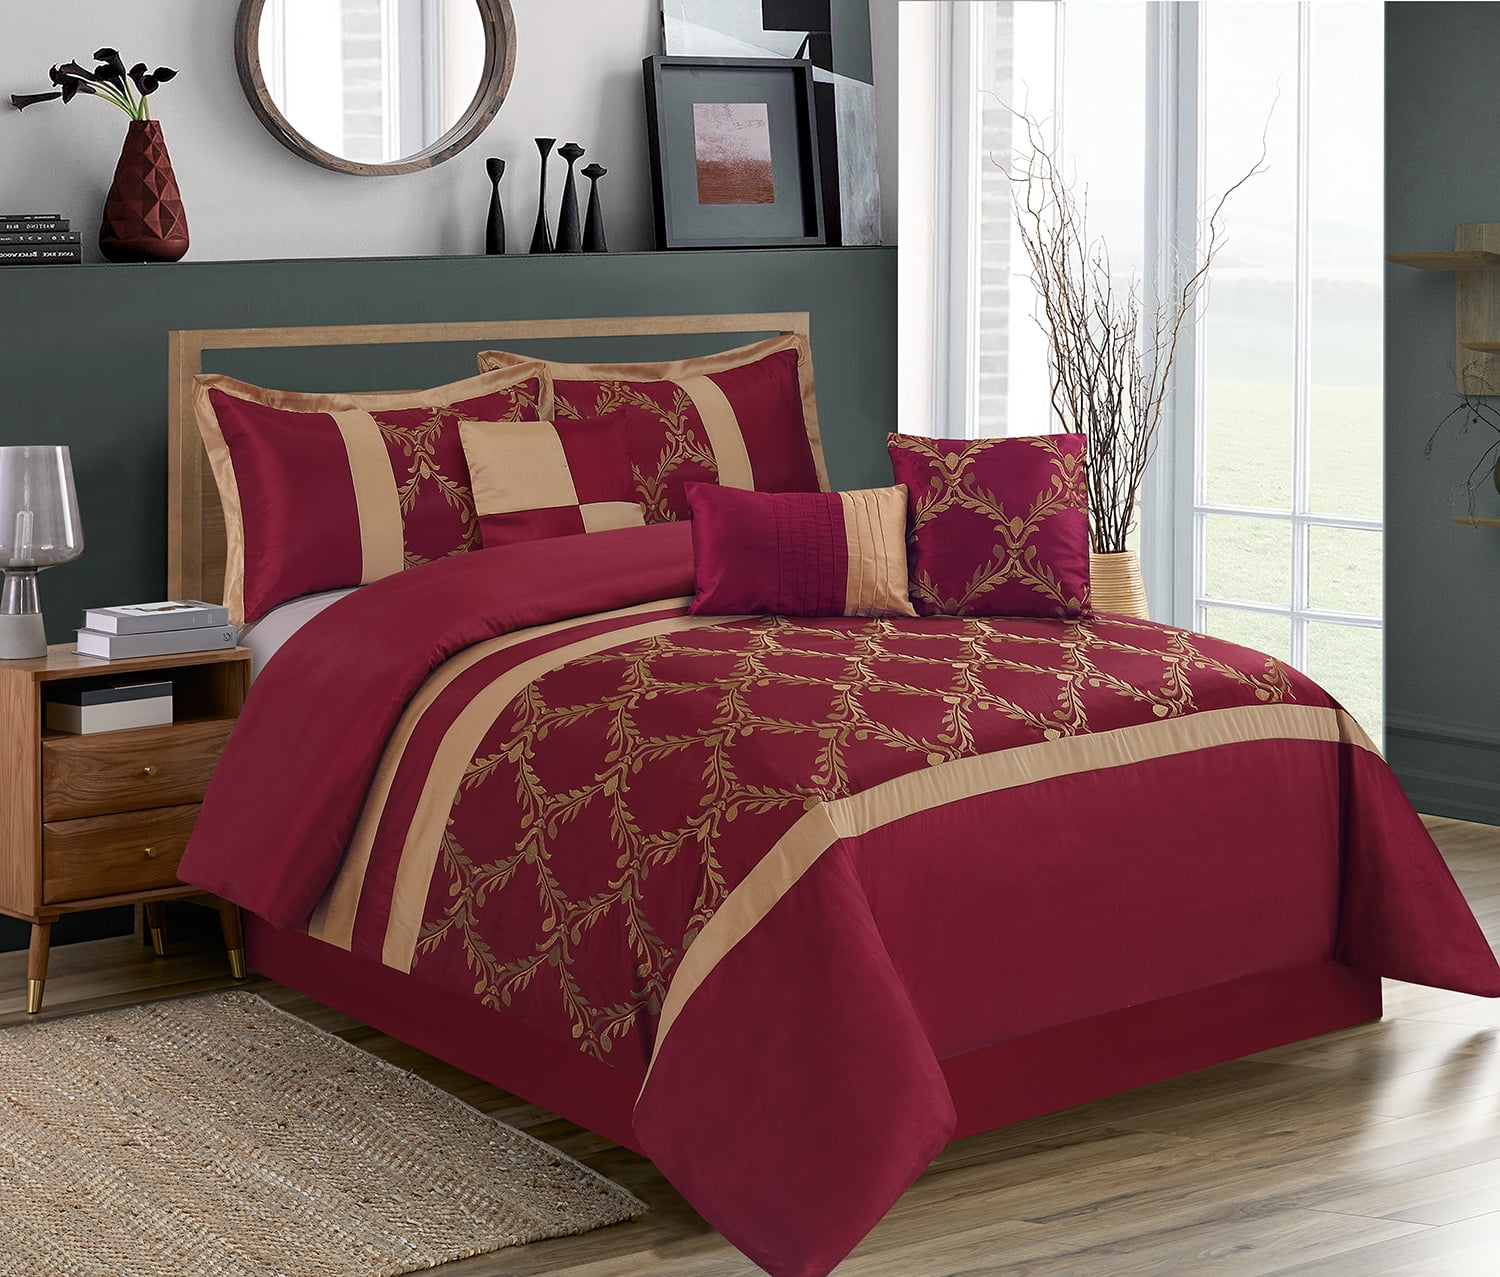 King DCP 7-Piece Bedding Comforter Set Comfortable and Warm Burgundy 